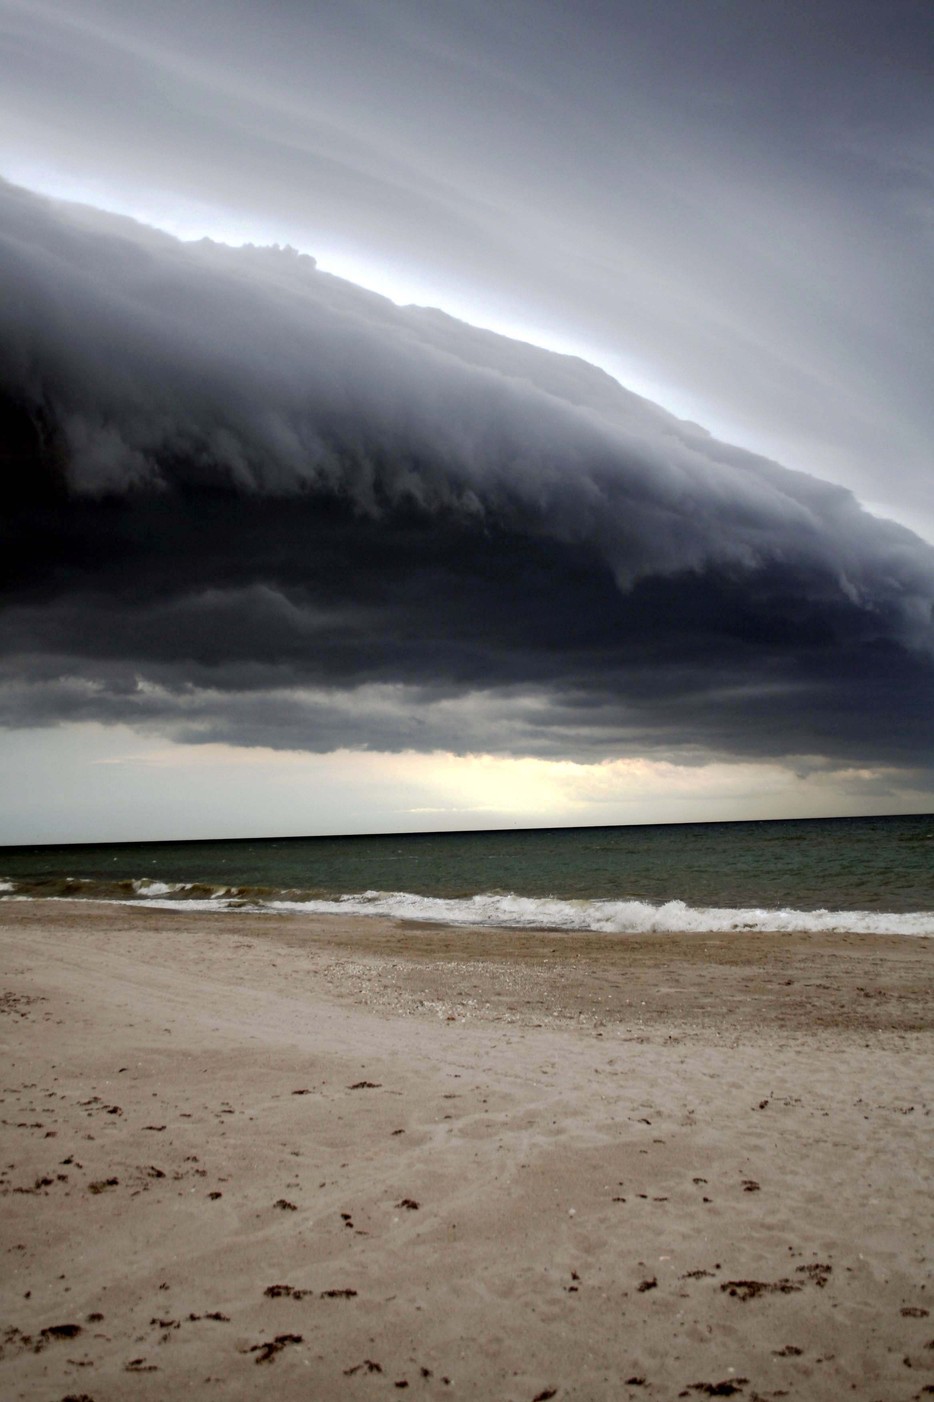 Indialantic, FL Summer storm rolling into Indialantic Fl. photo